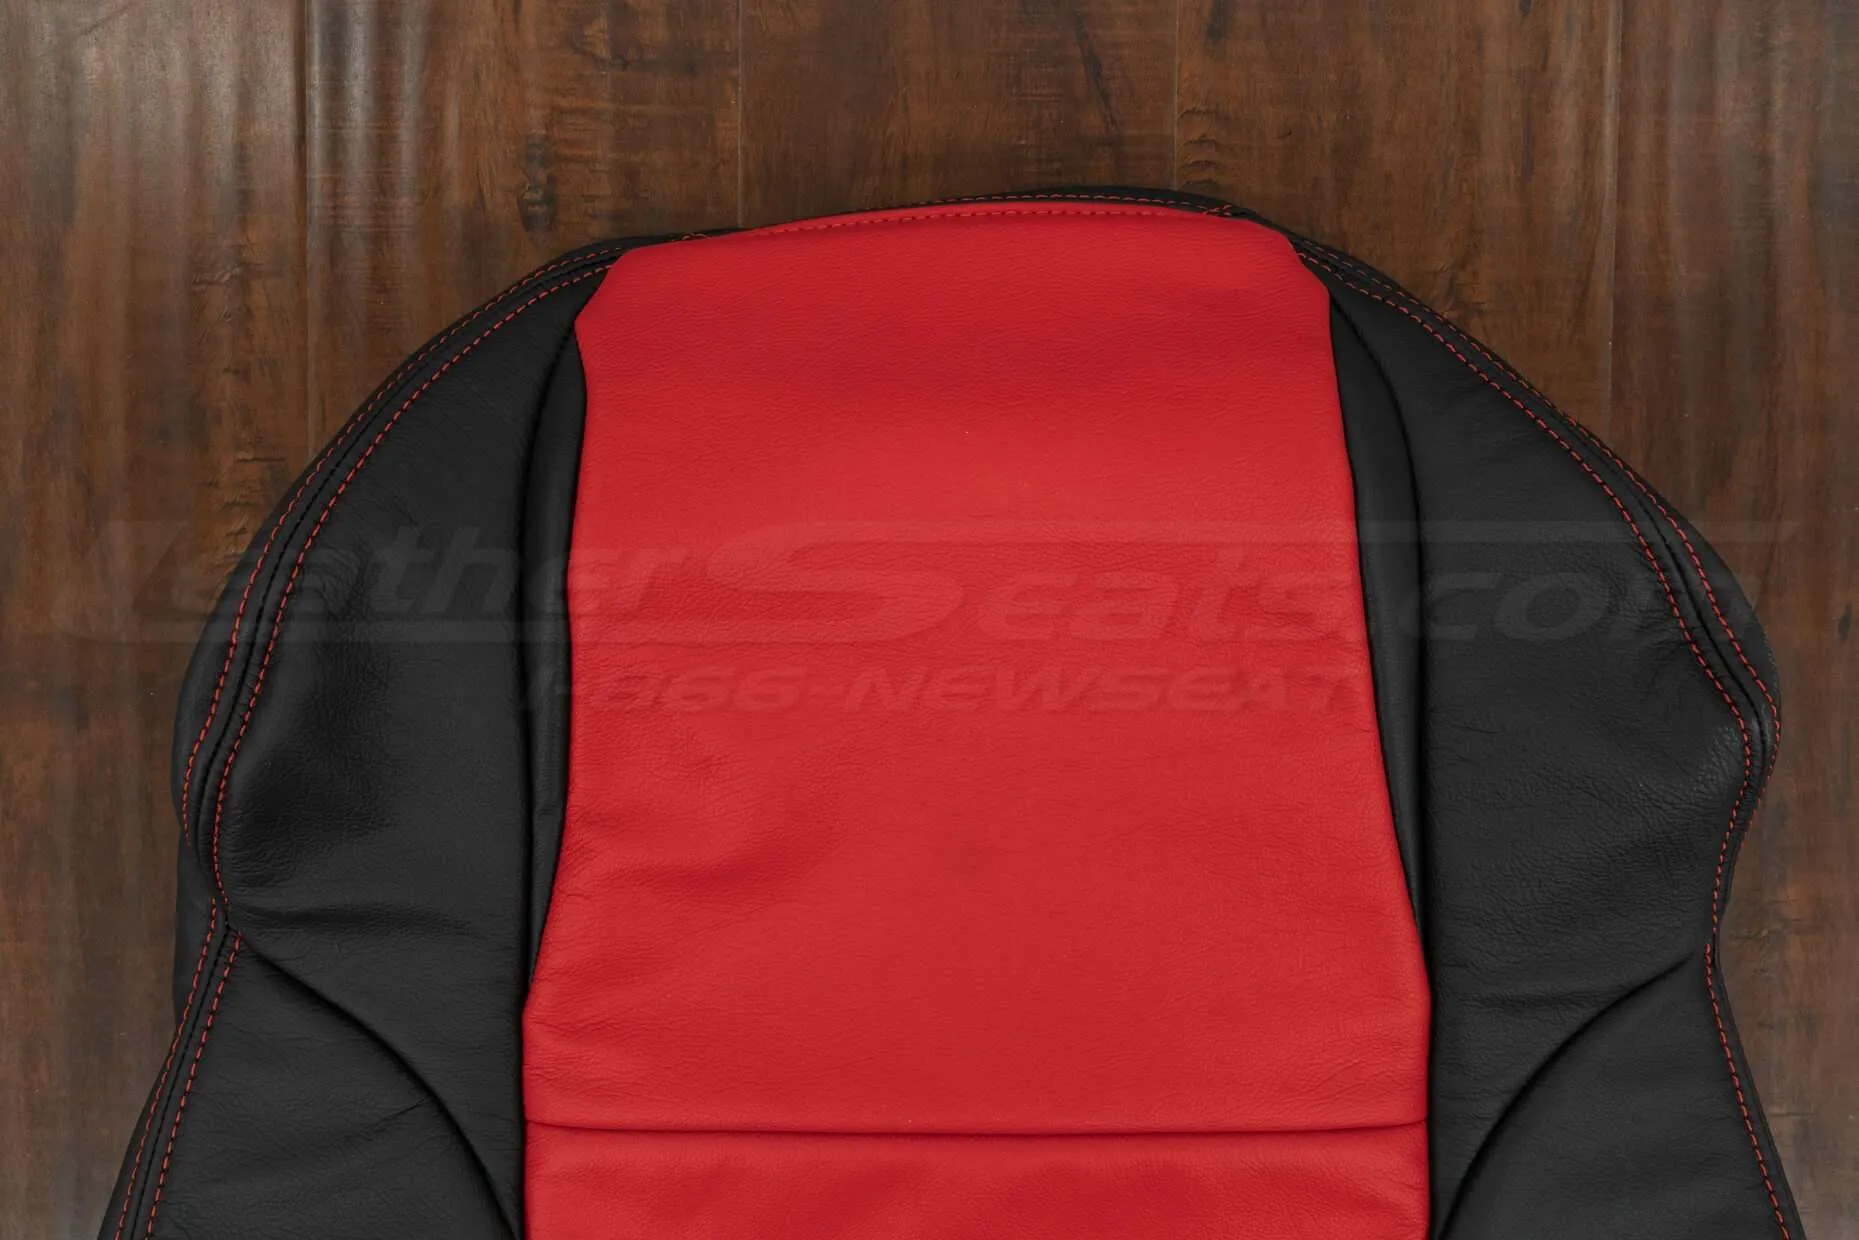 04-06 Pontiac GTO Leather Kit - Black & Bright Red - Upper portion of front backrest